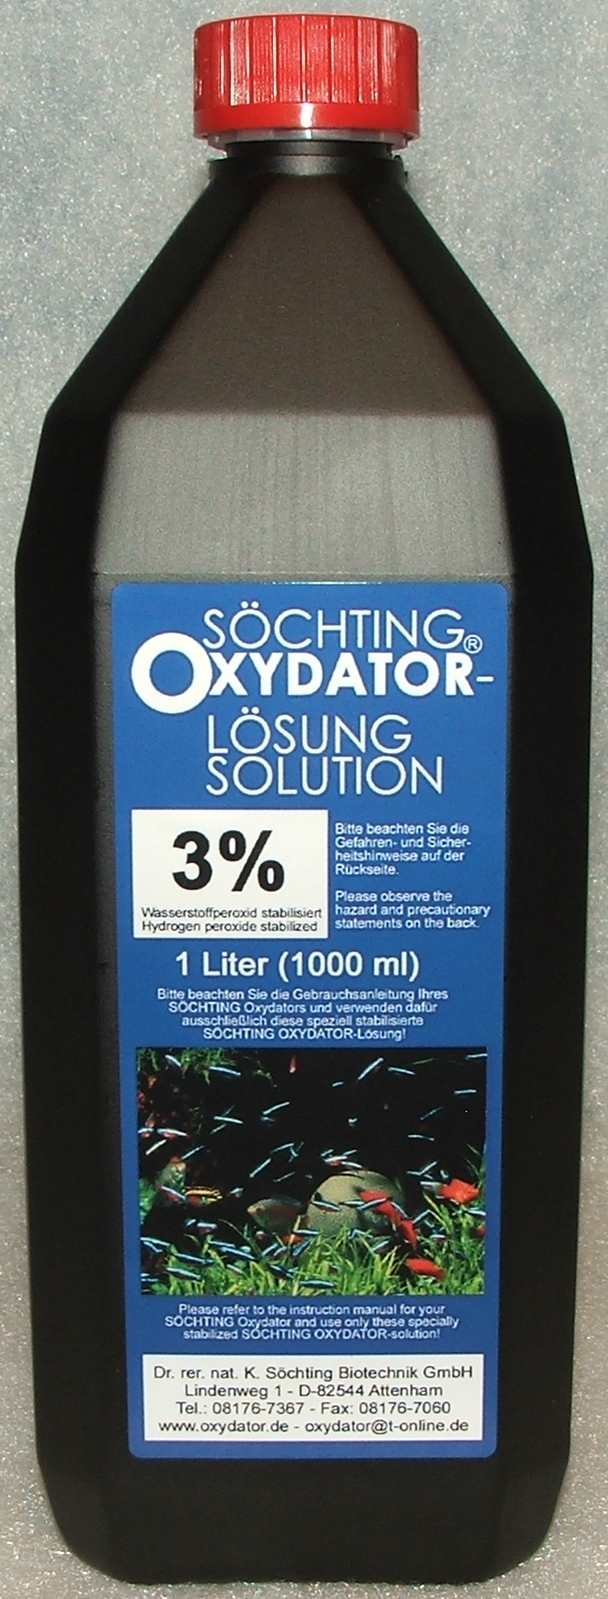 Söchting Oxydator-Lösung 3% 1 Liter